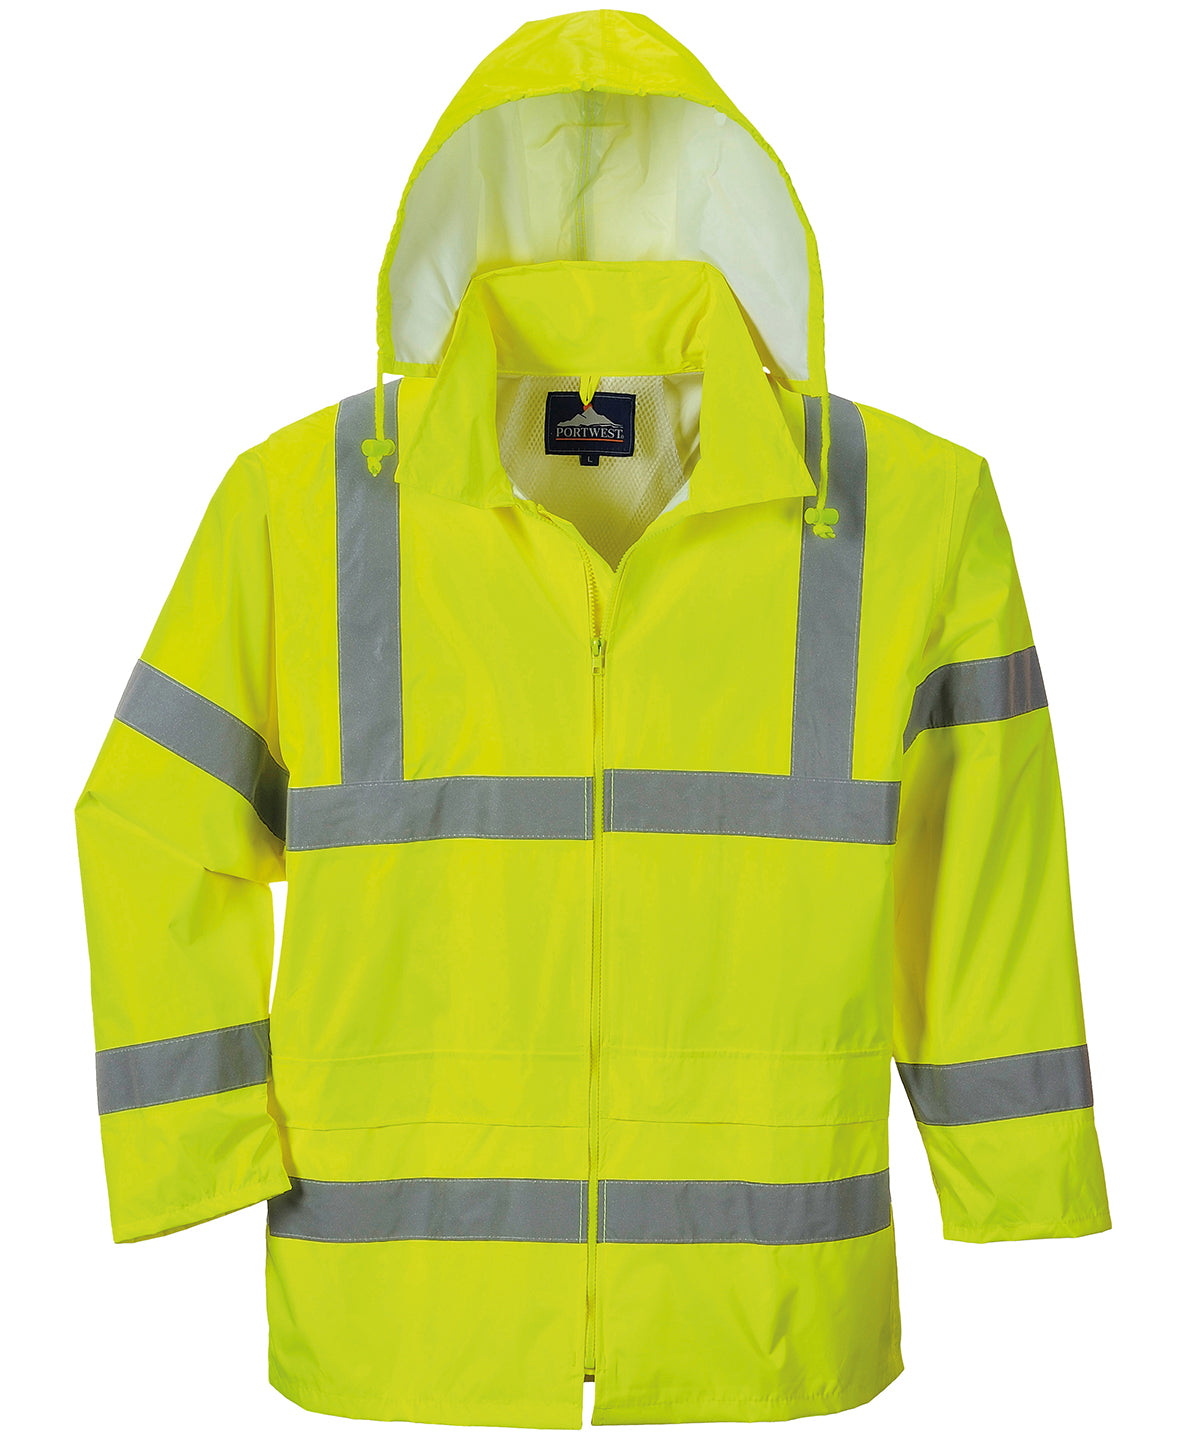 Portwest Hi-vis rain jacket